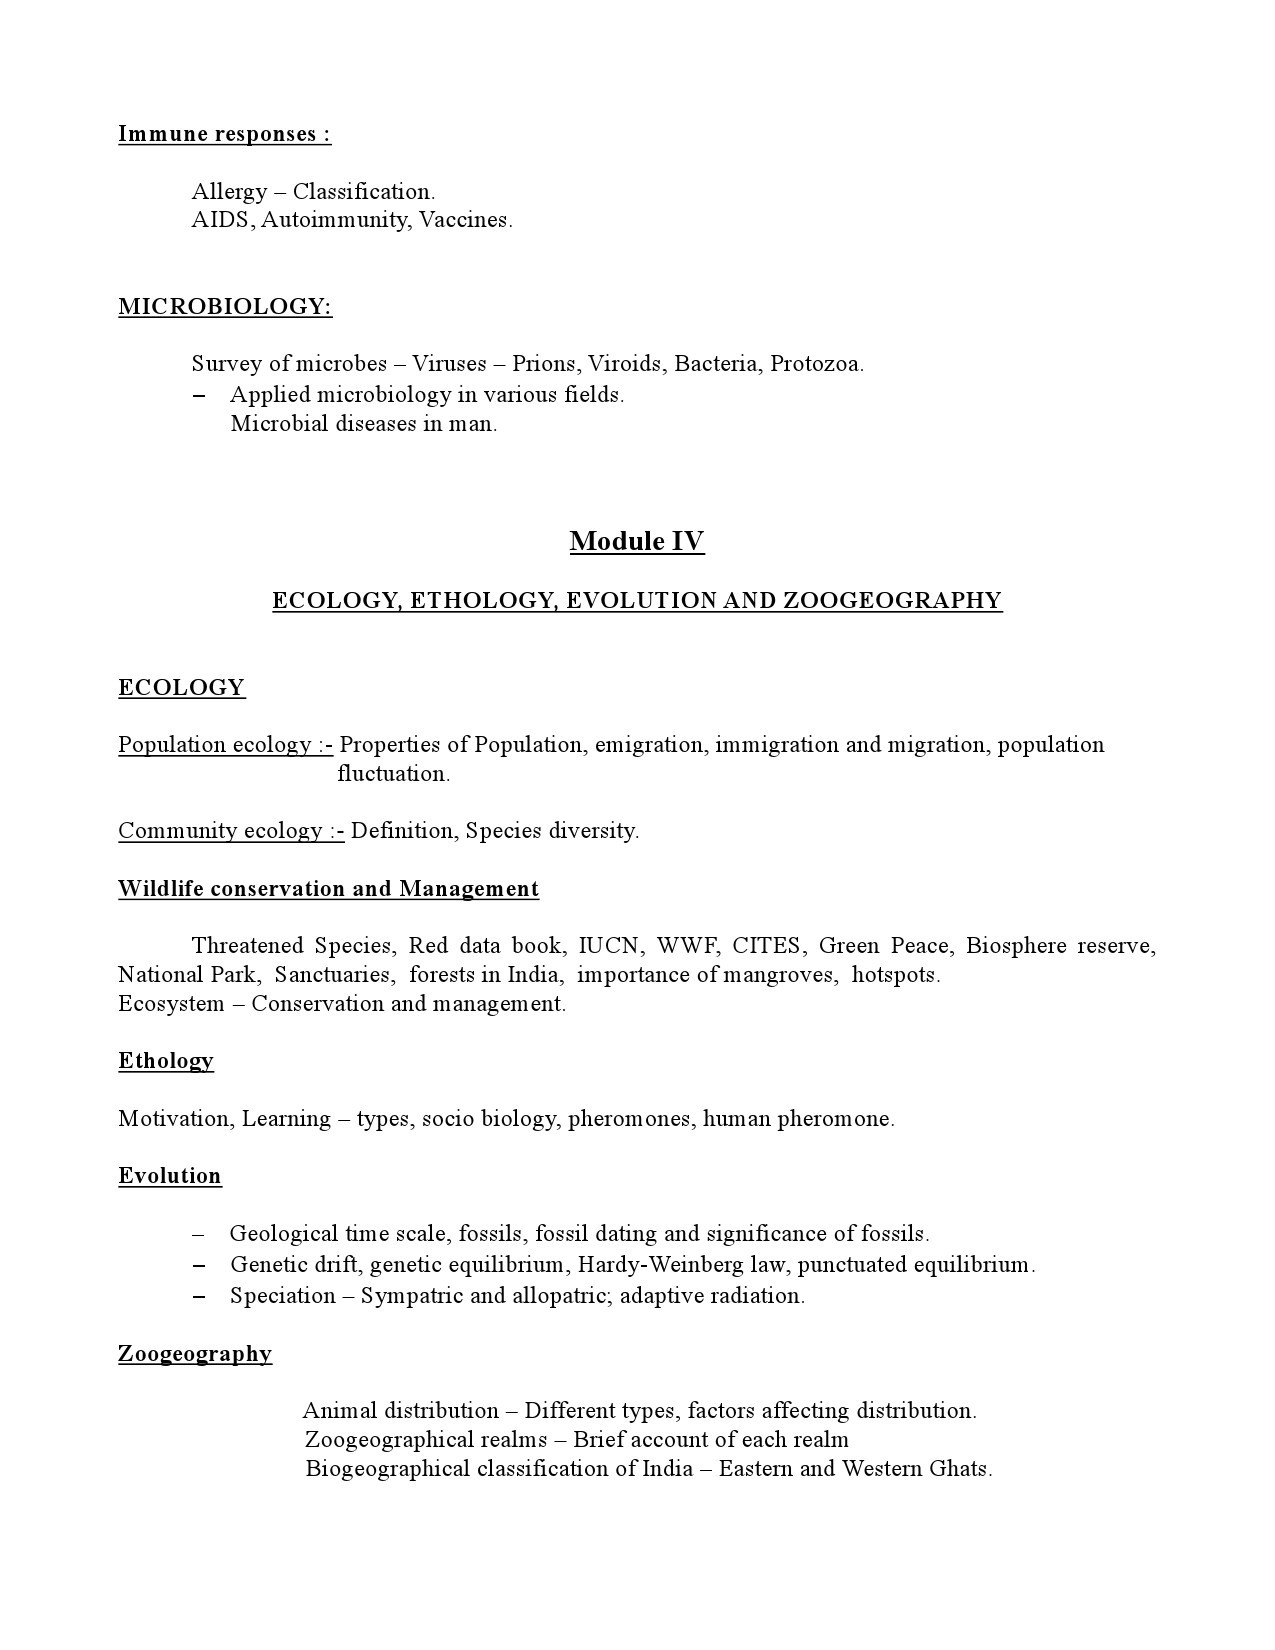 High School Assistant Natural Science Part A Kerala Examination Syllabus 2021 - Notification Image 8